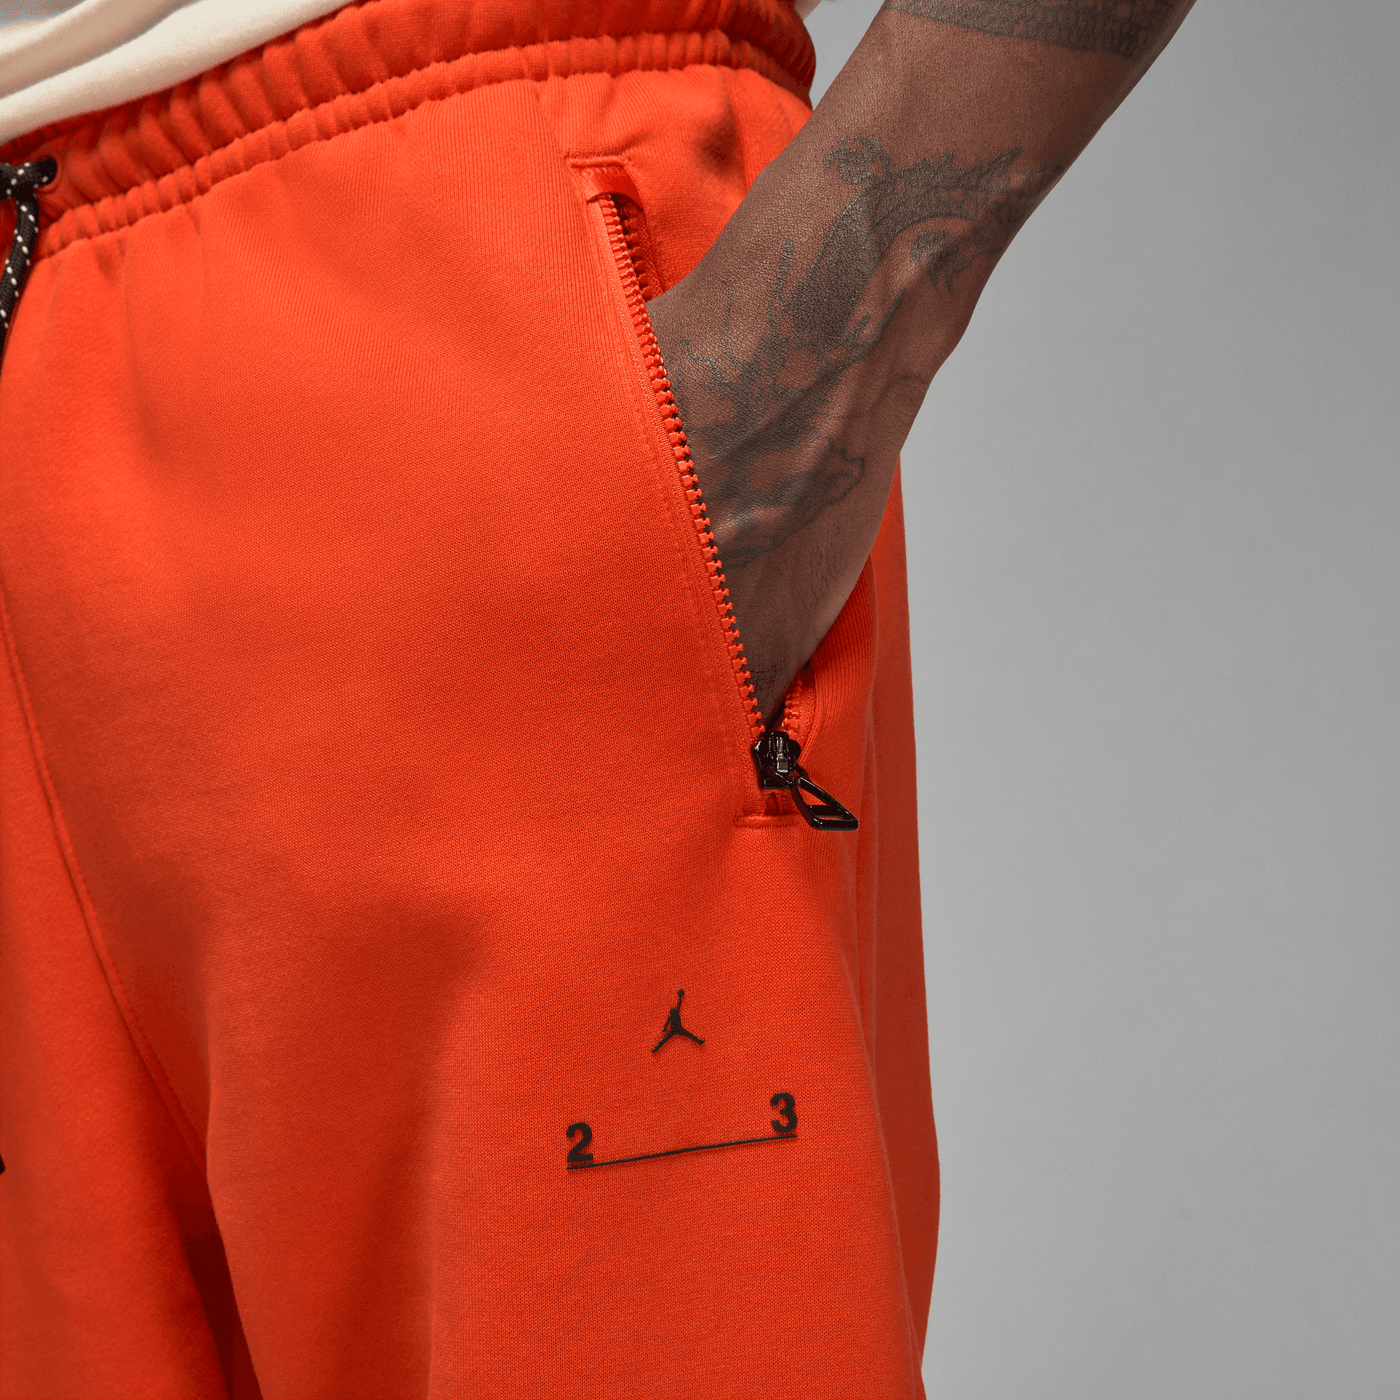 Nike Air Jordan 23 Engineered Dress Orange